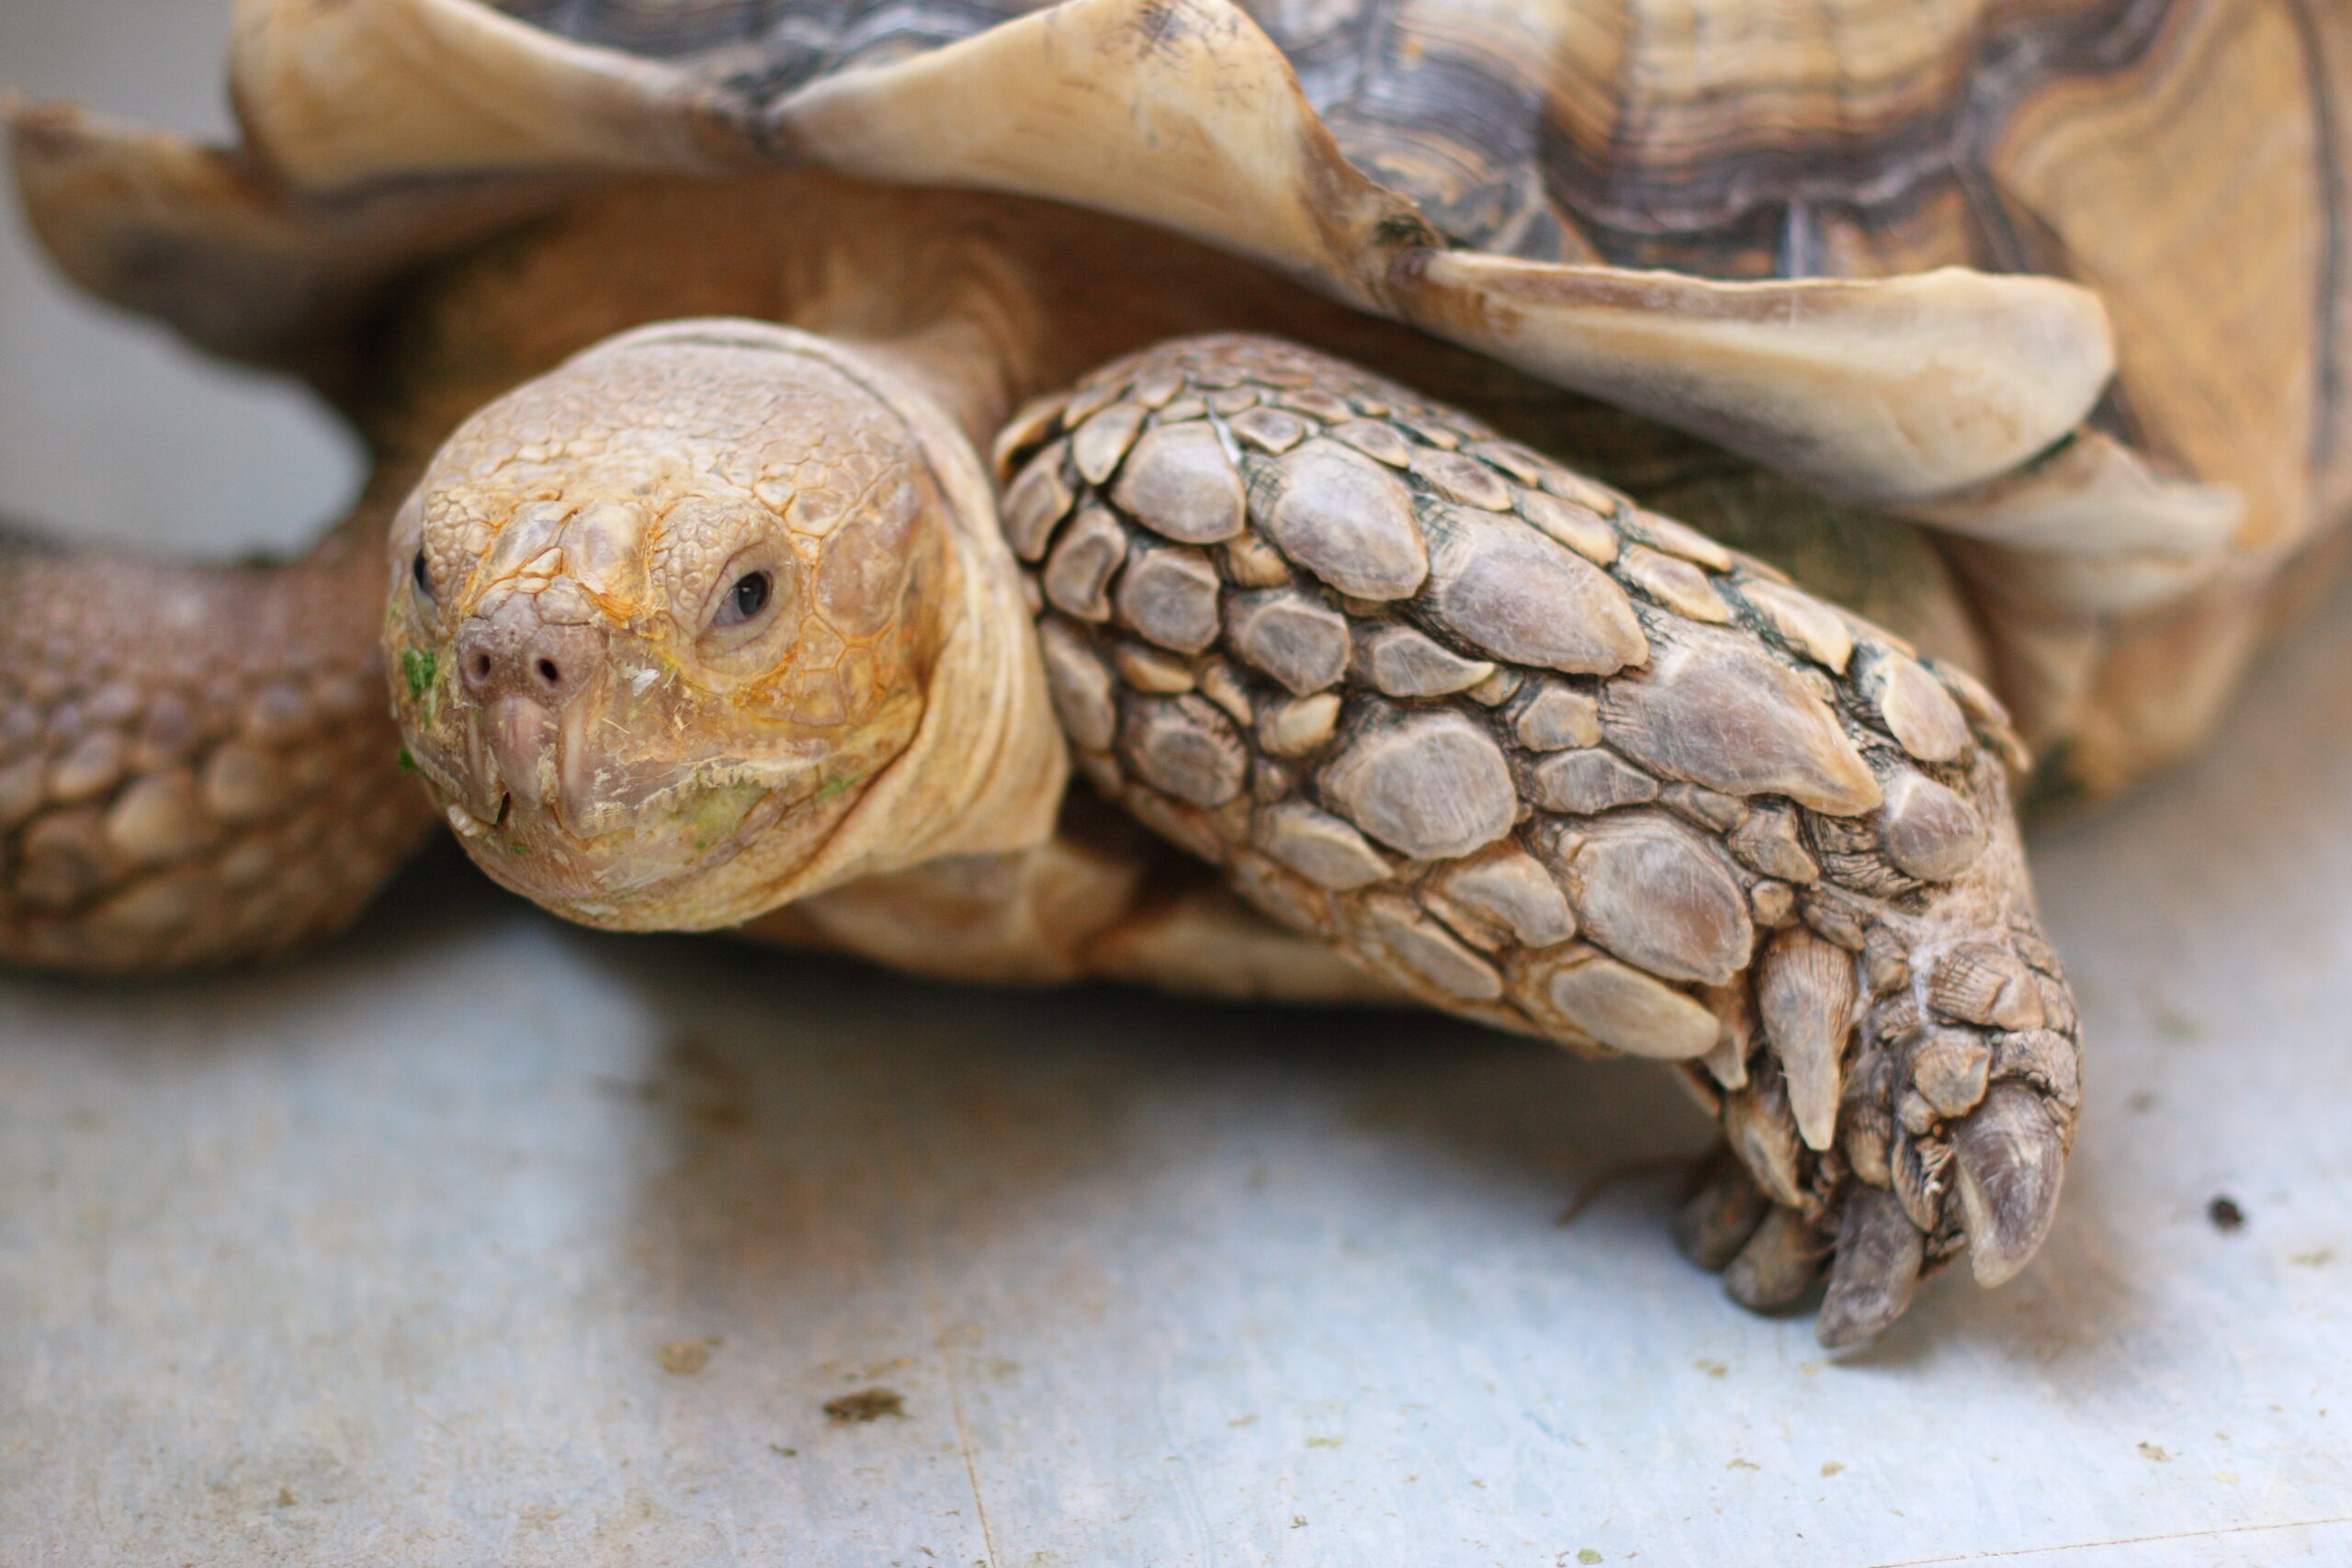 How do you build a Sulcata tortoise habitat?